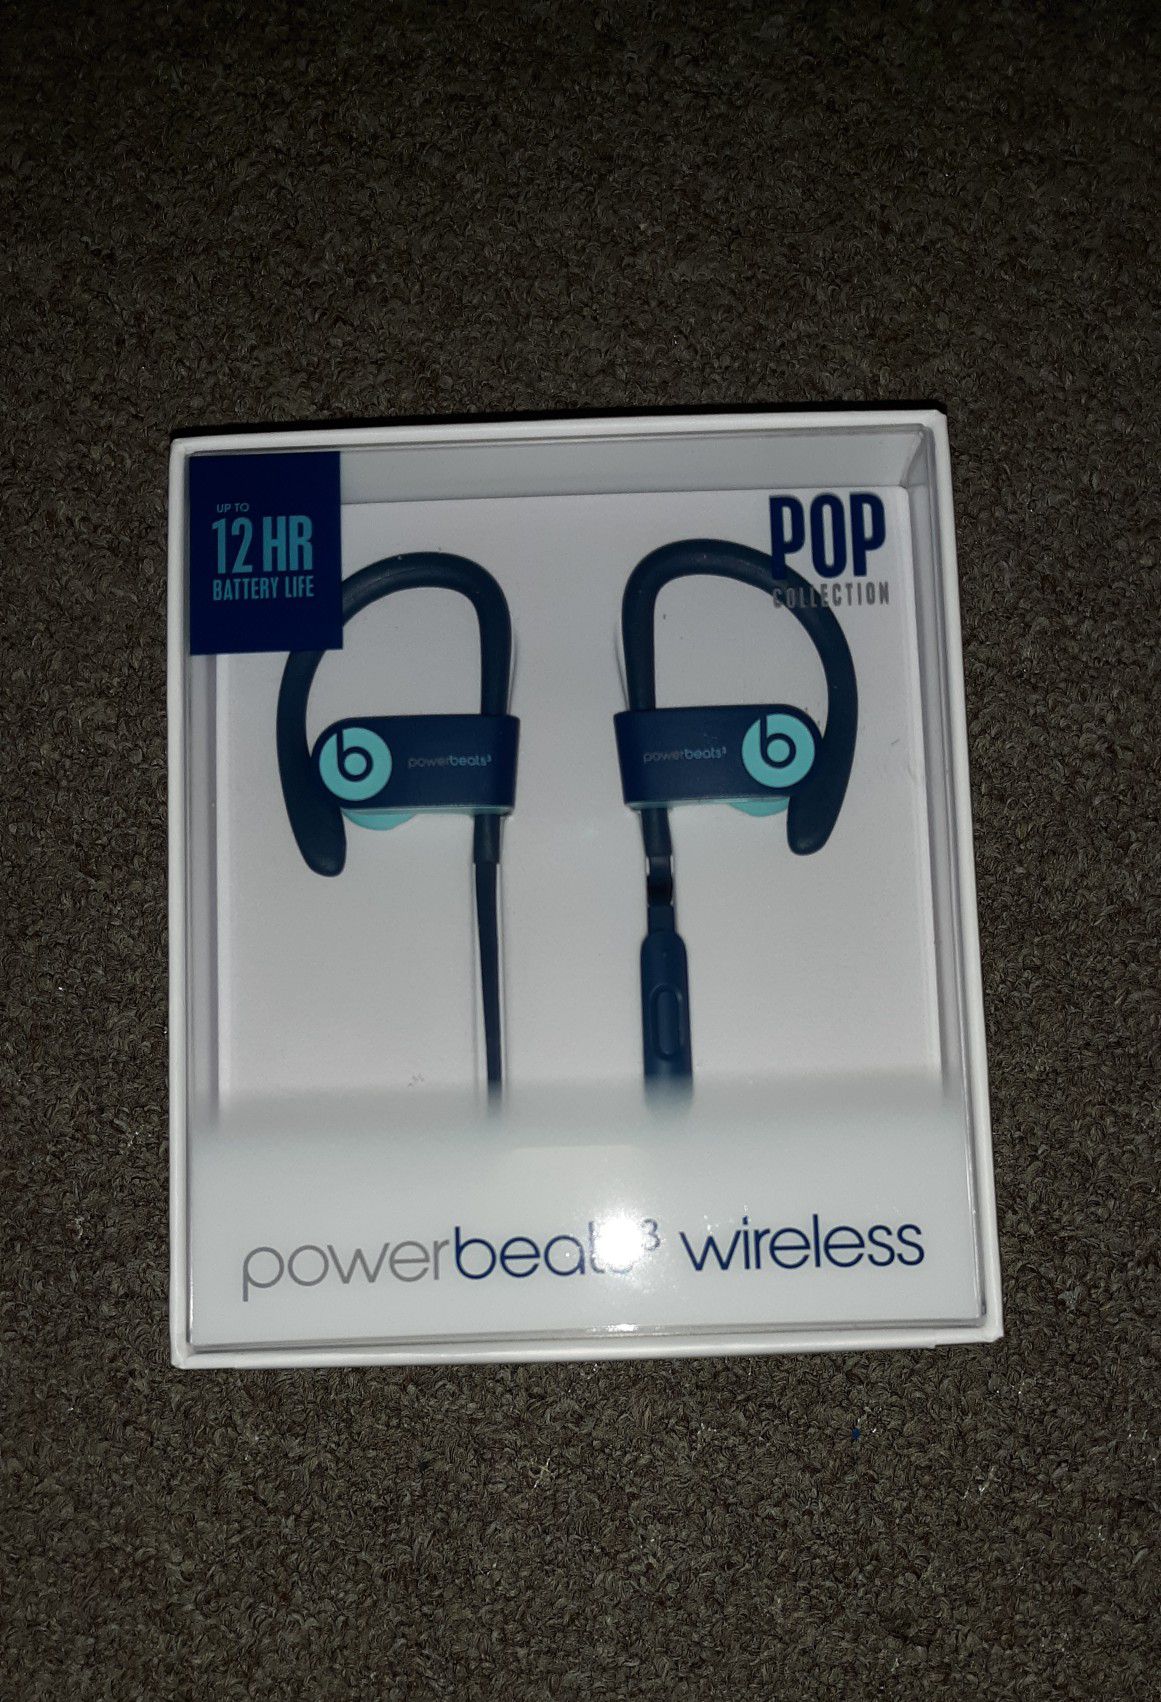 Powerbeats3 Wireless Earphones - Beats Pop Collection - Pop Blue